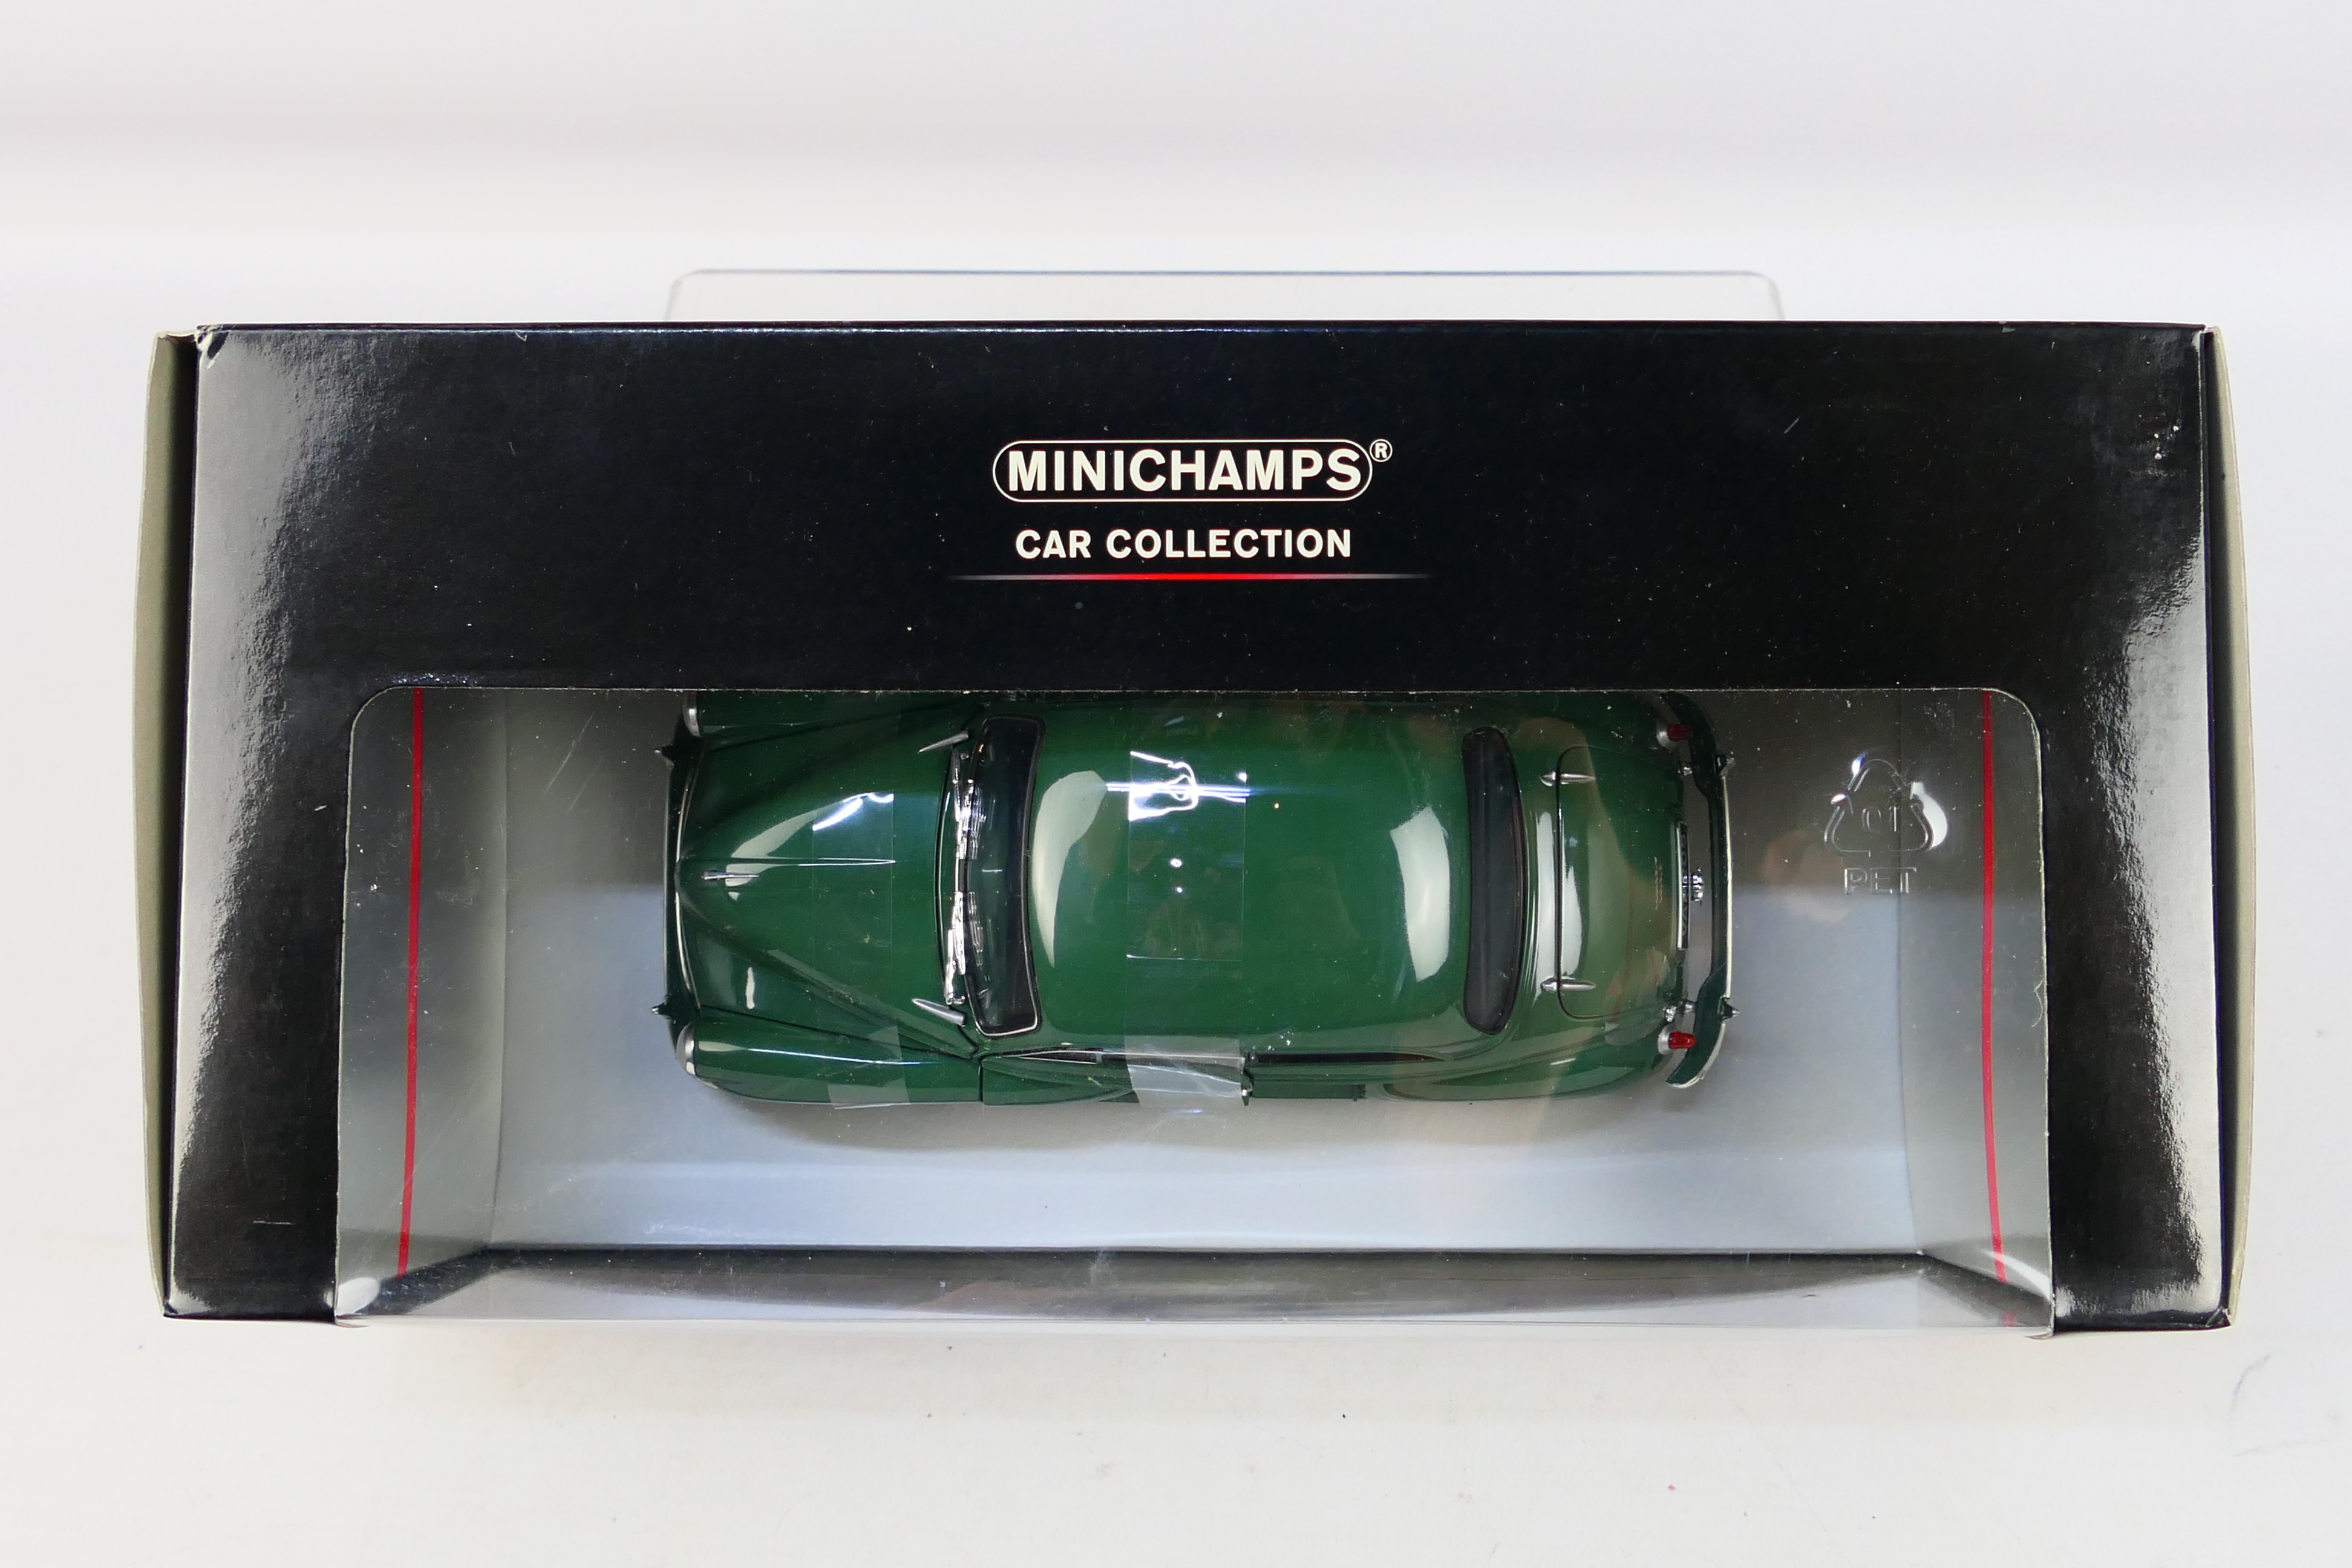 Minichamps - A boxed Minichamps 'Car Collection' #150137000 1:18 scale Morris Minor. - Image 3 of 3